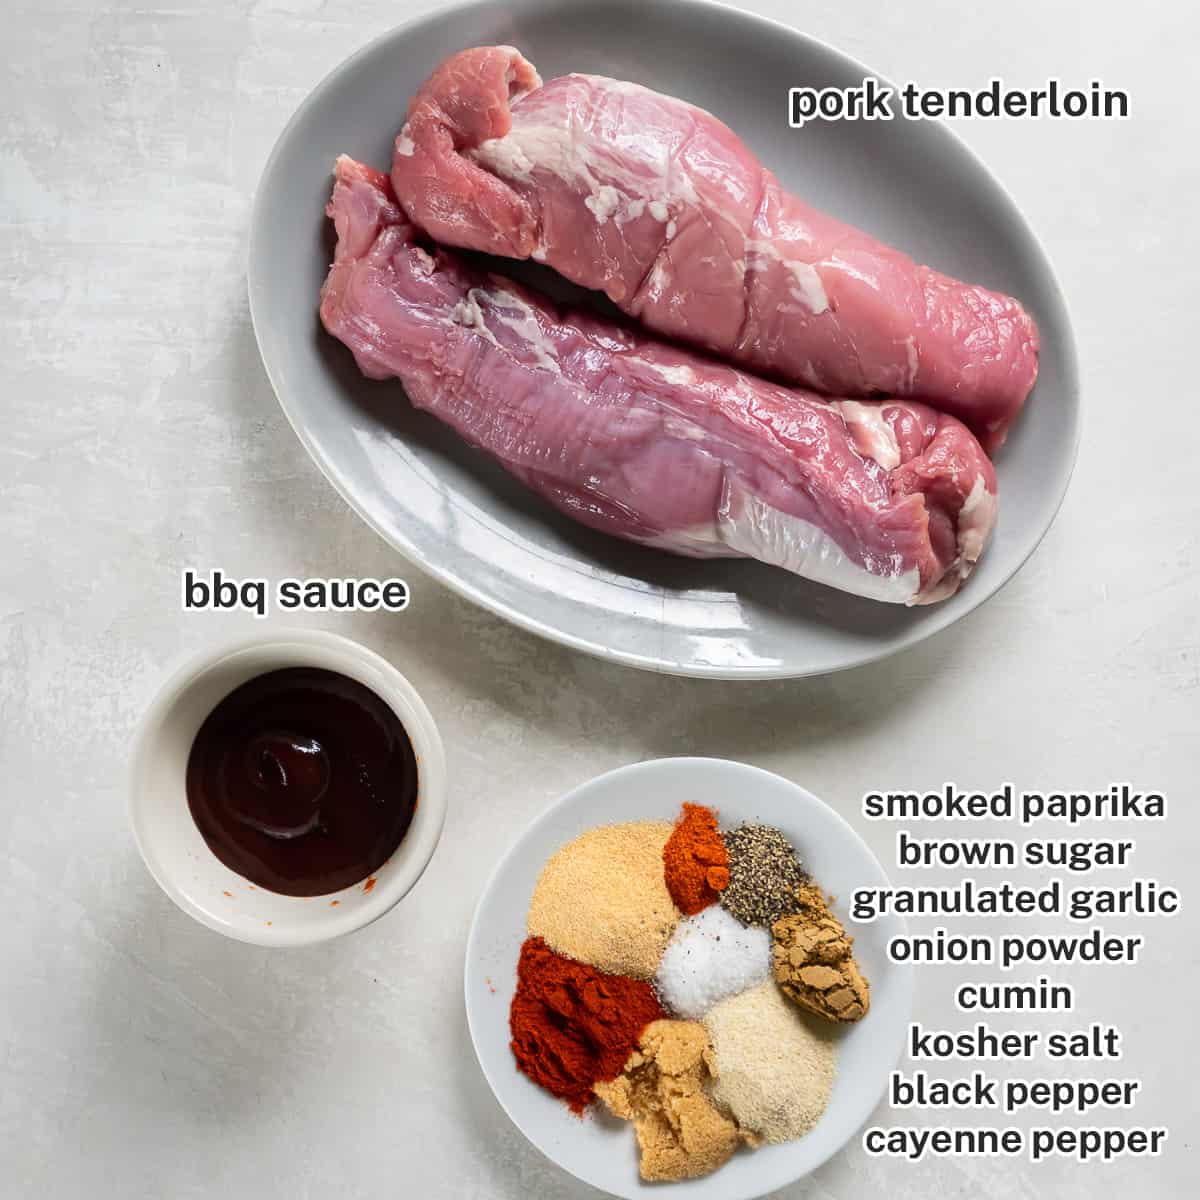 Pork tenderloin, bbq sauce, and seasonings with text.